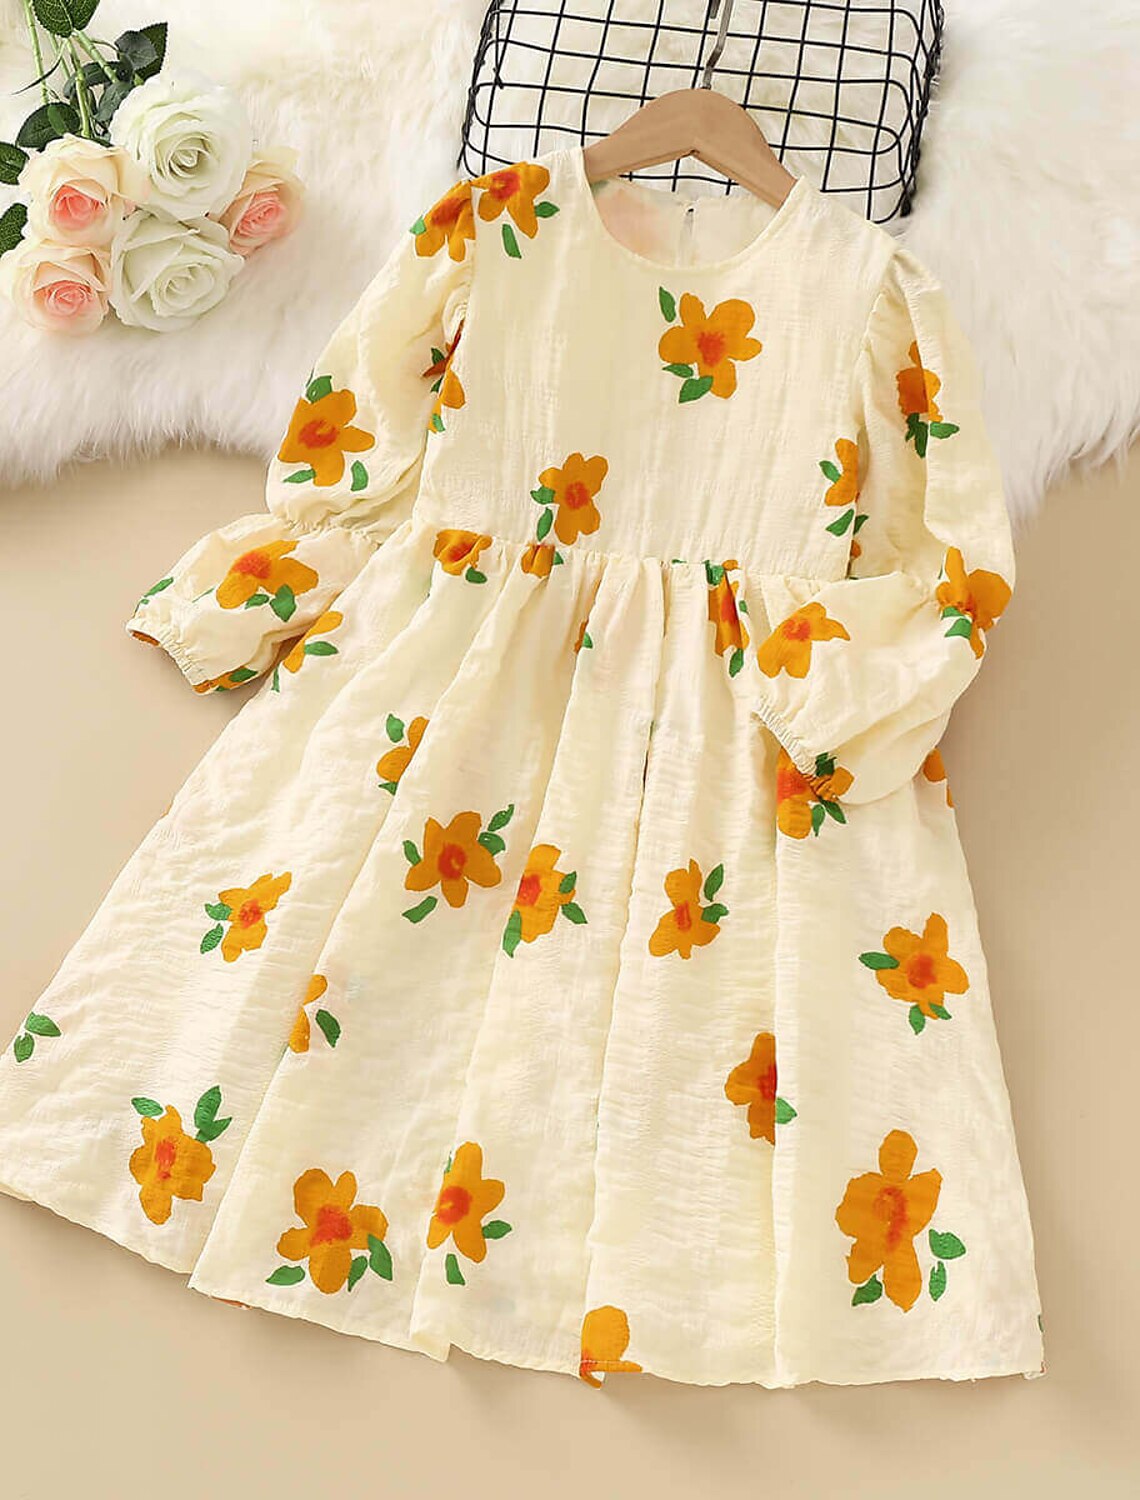 Children Kids Girls Spring Flower Casual Cotton Long Sleeves Printed Dresses